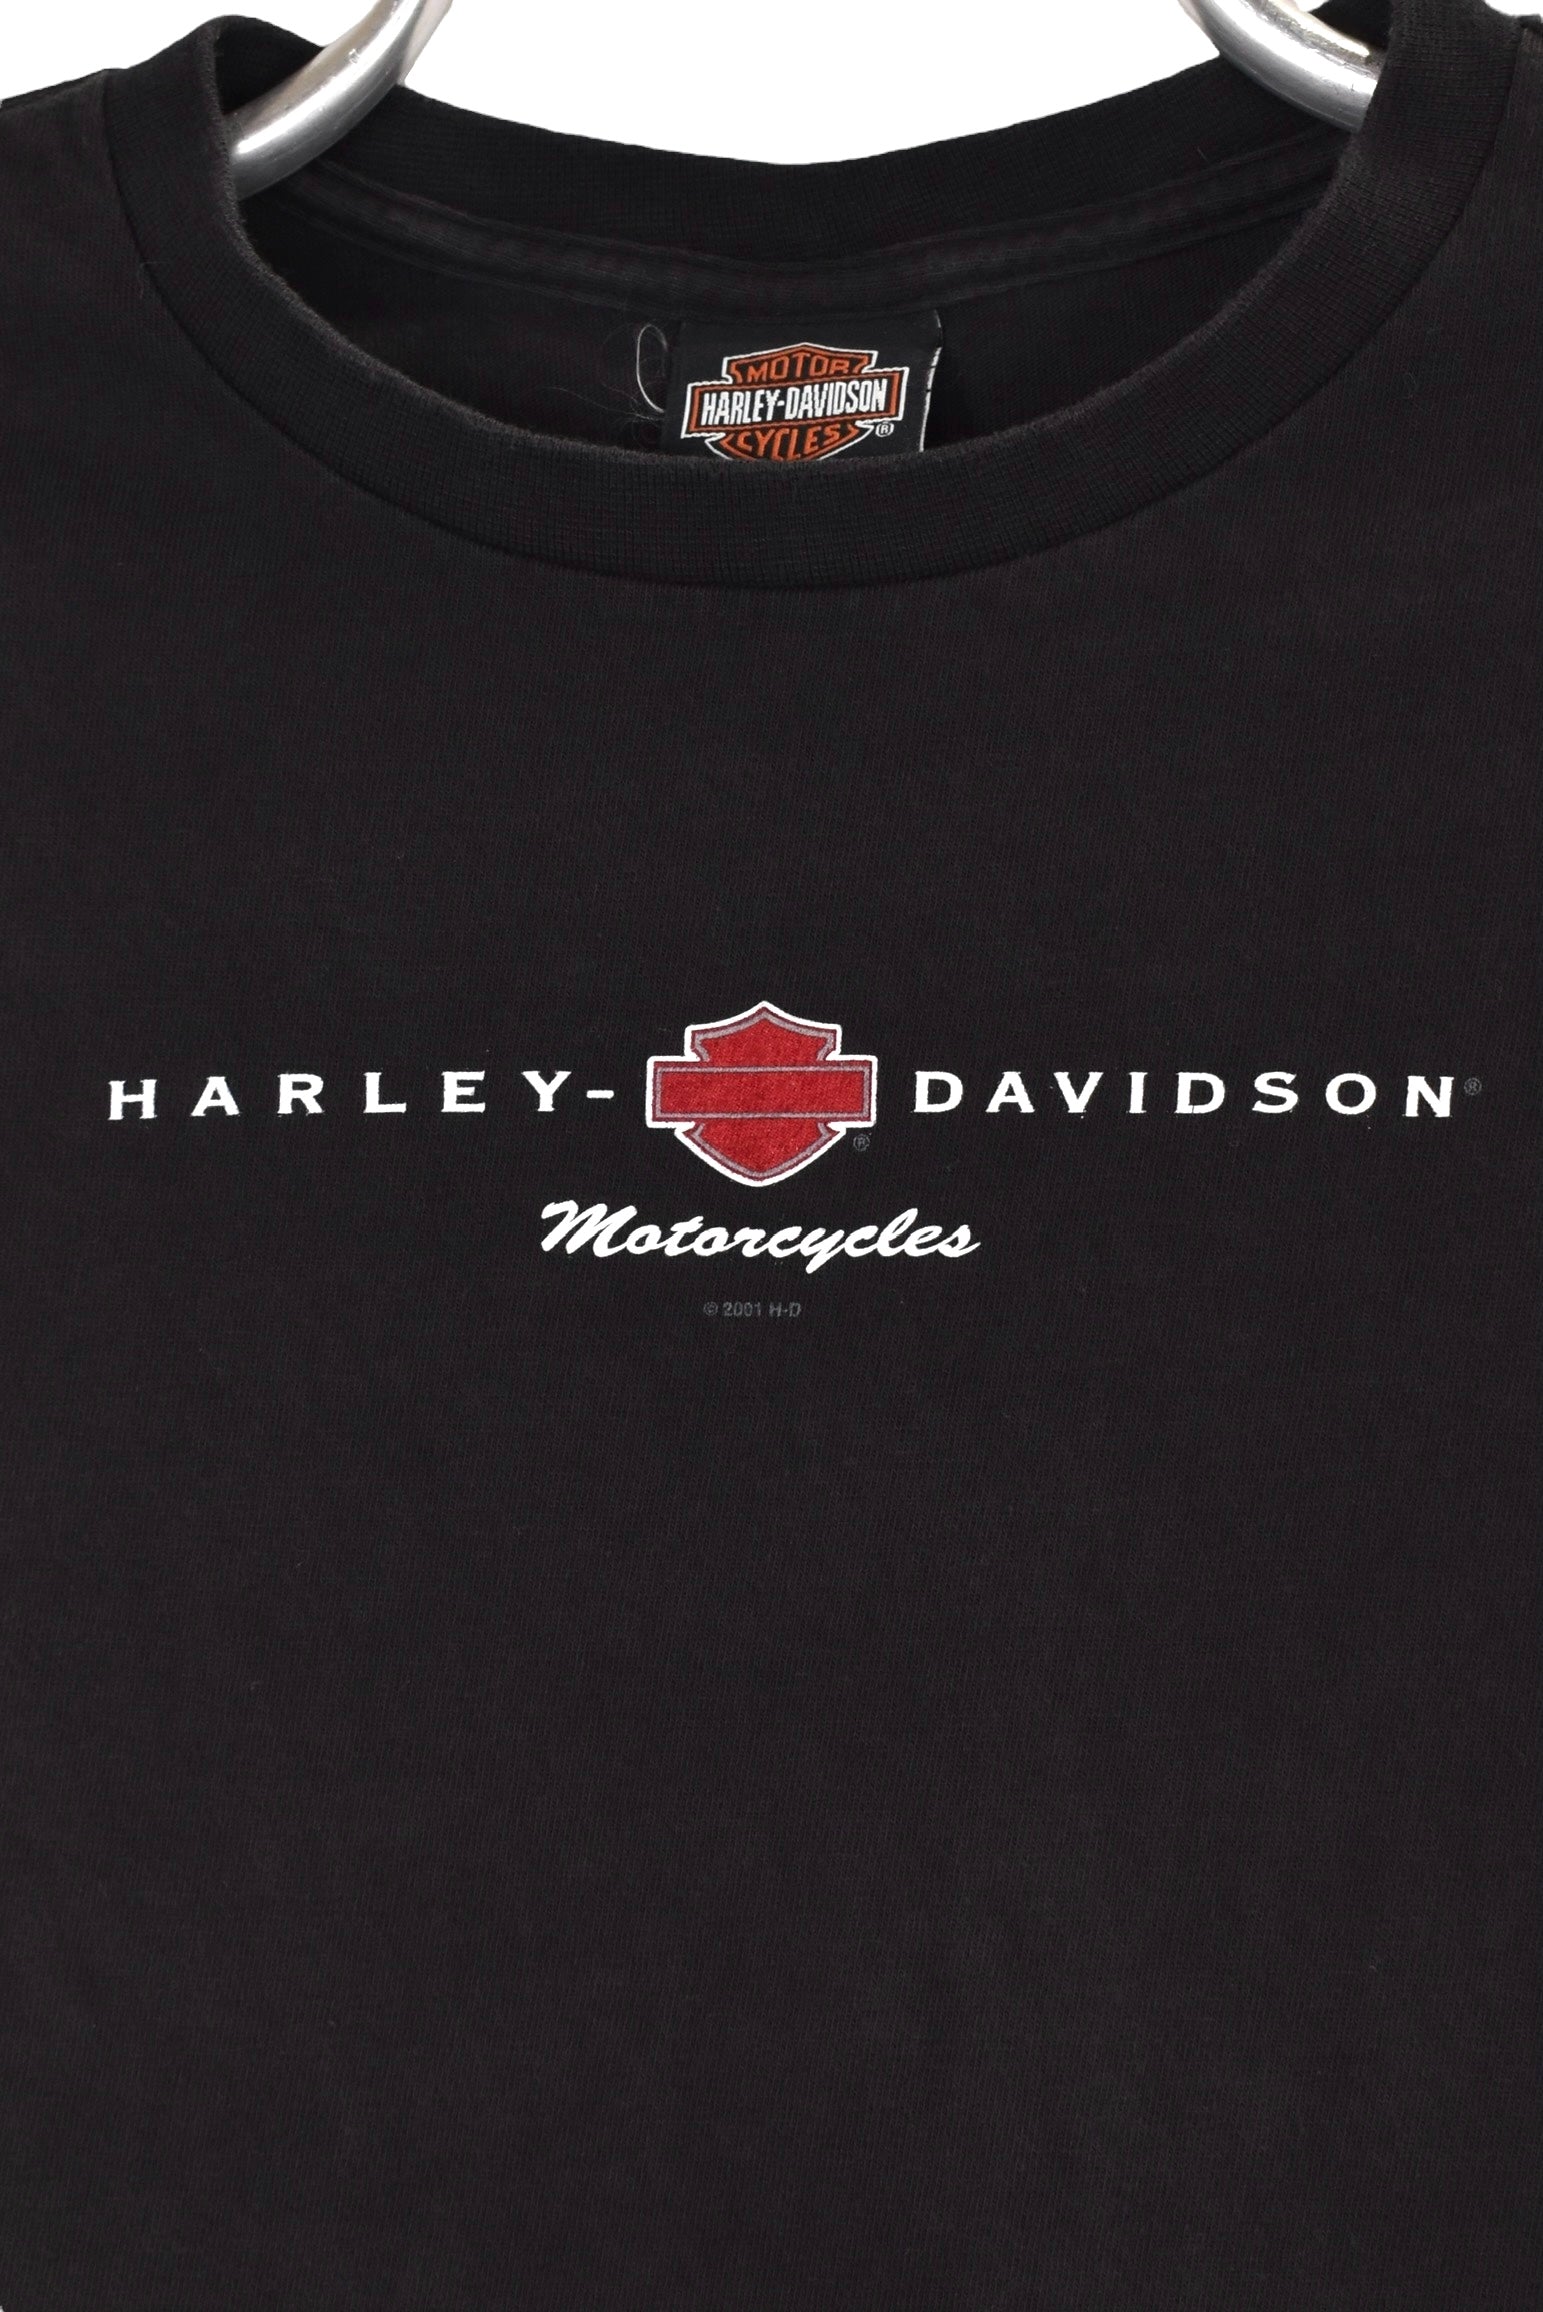 Women's vintage Harley Davidson shirt (L), black graphic tee